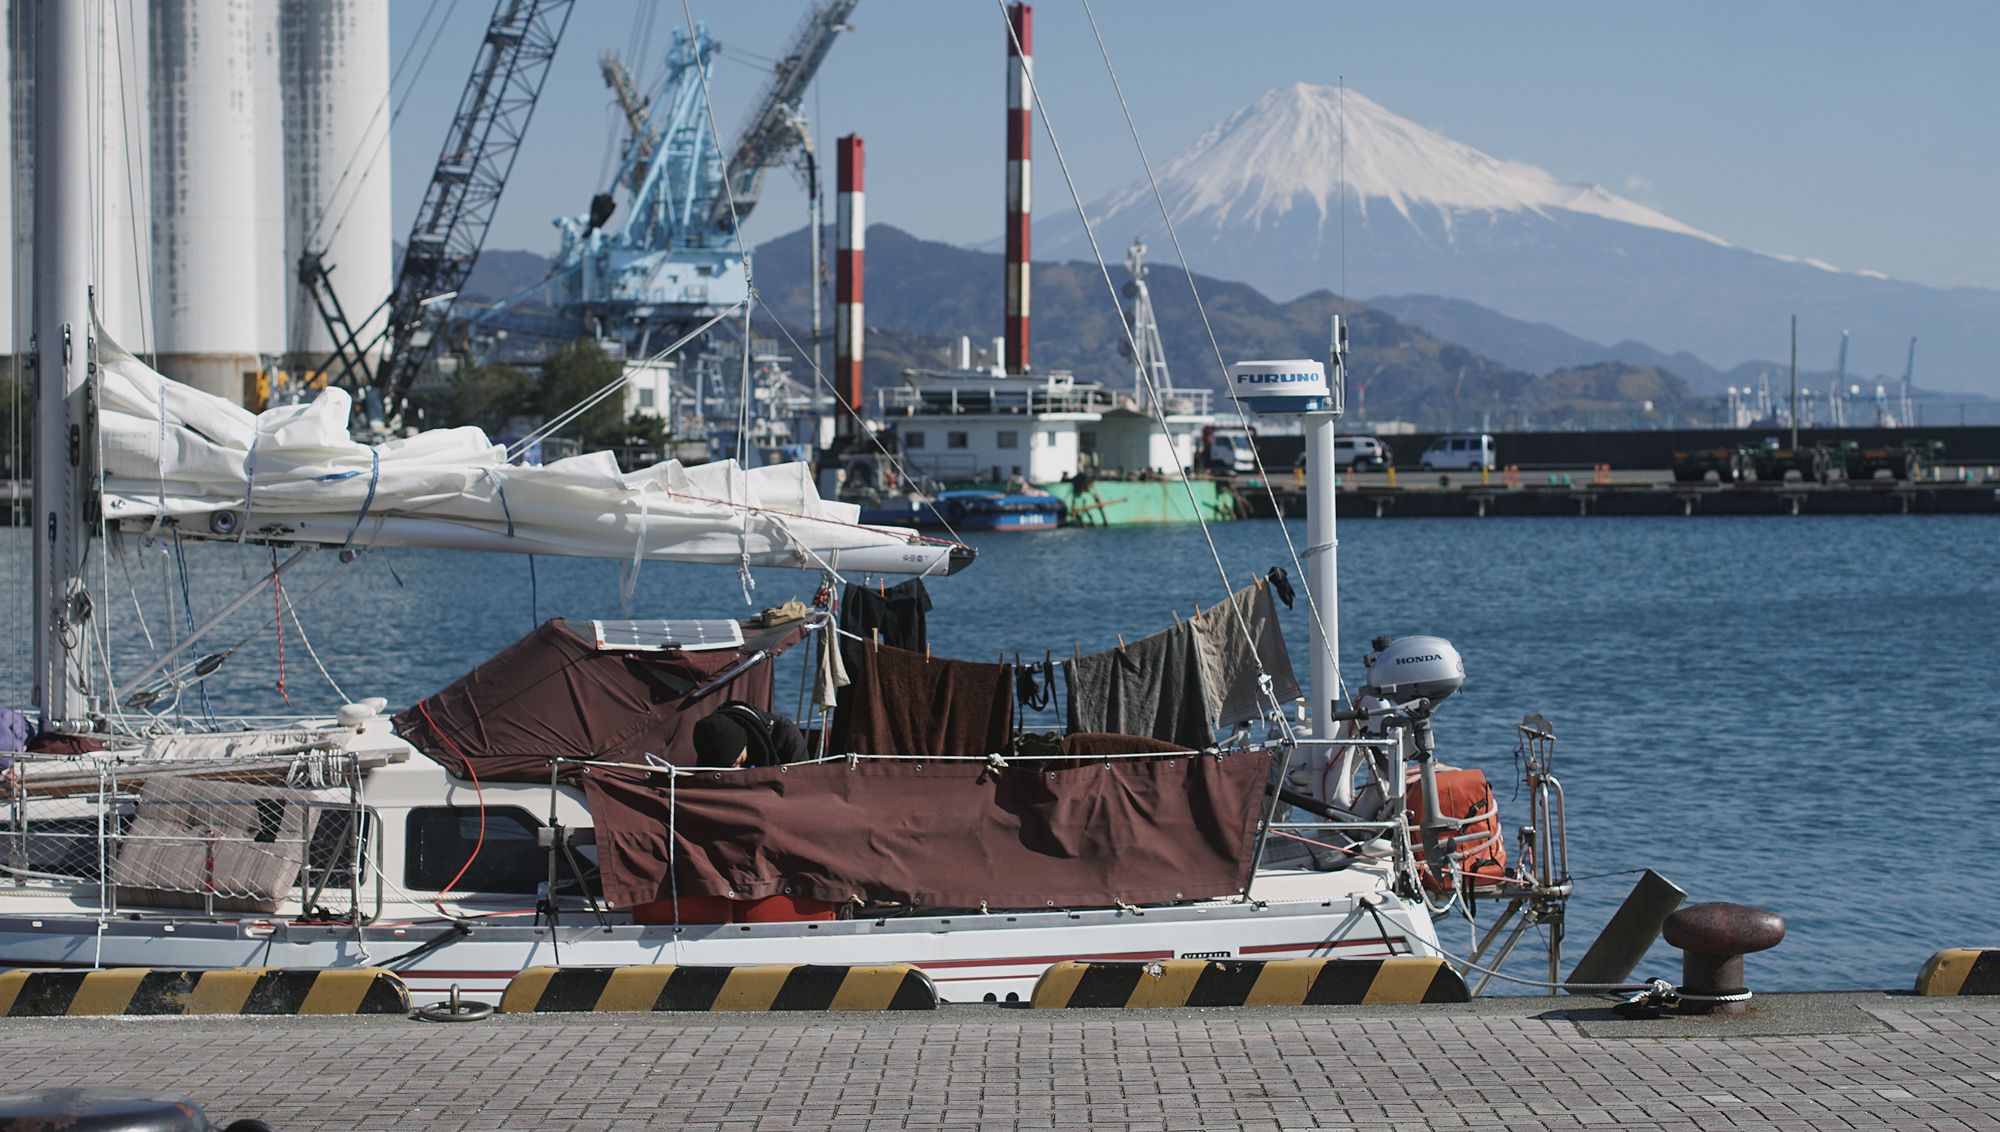 Pino docked in Shizuoka